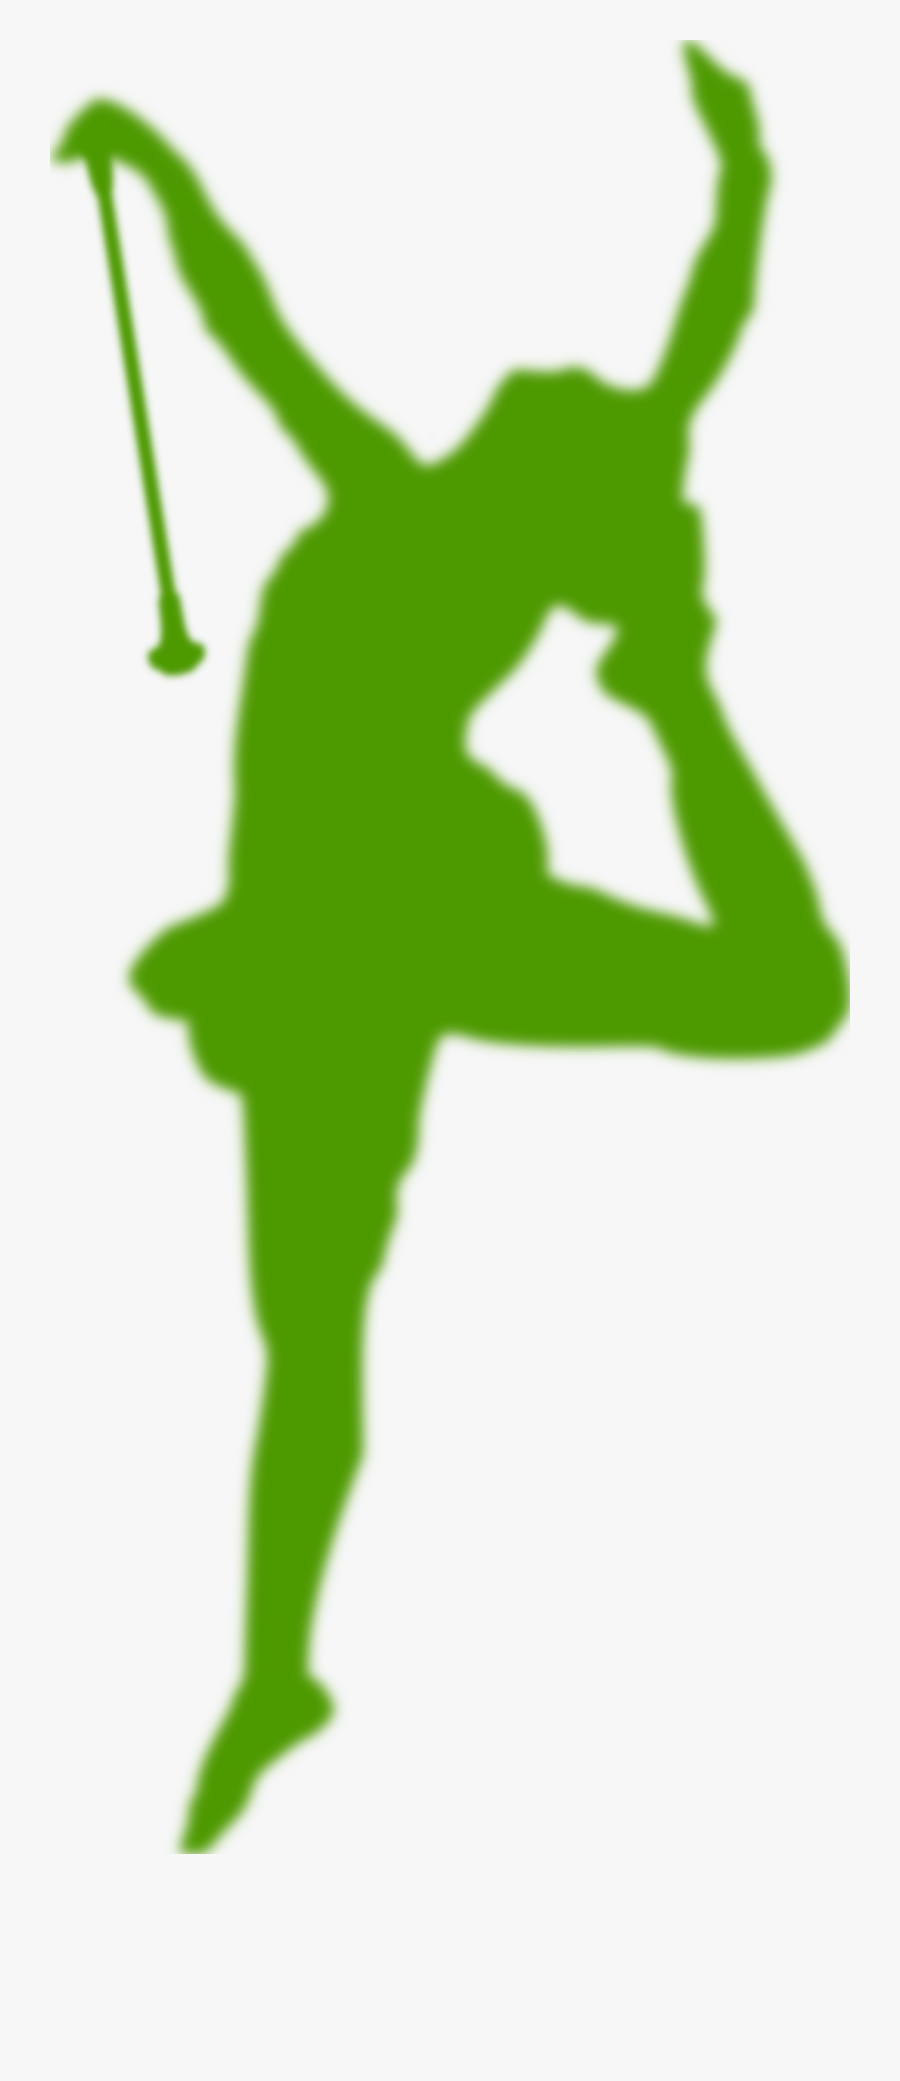 Majorette Dancer Silhouette Dance - Baton Twirler Clip Art, Transparent Clipart